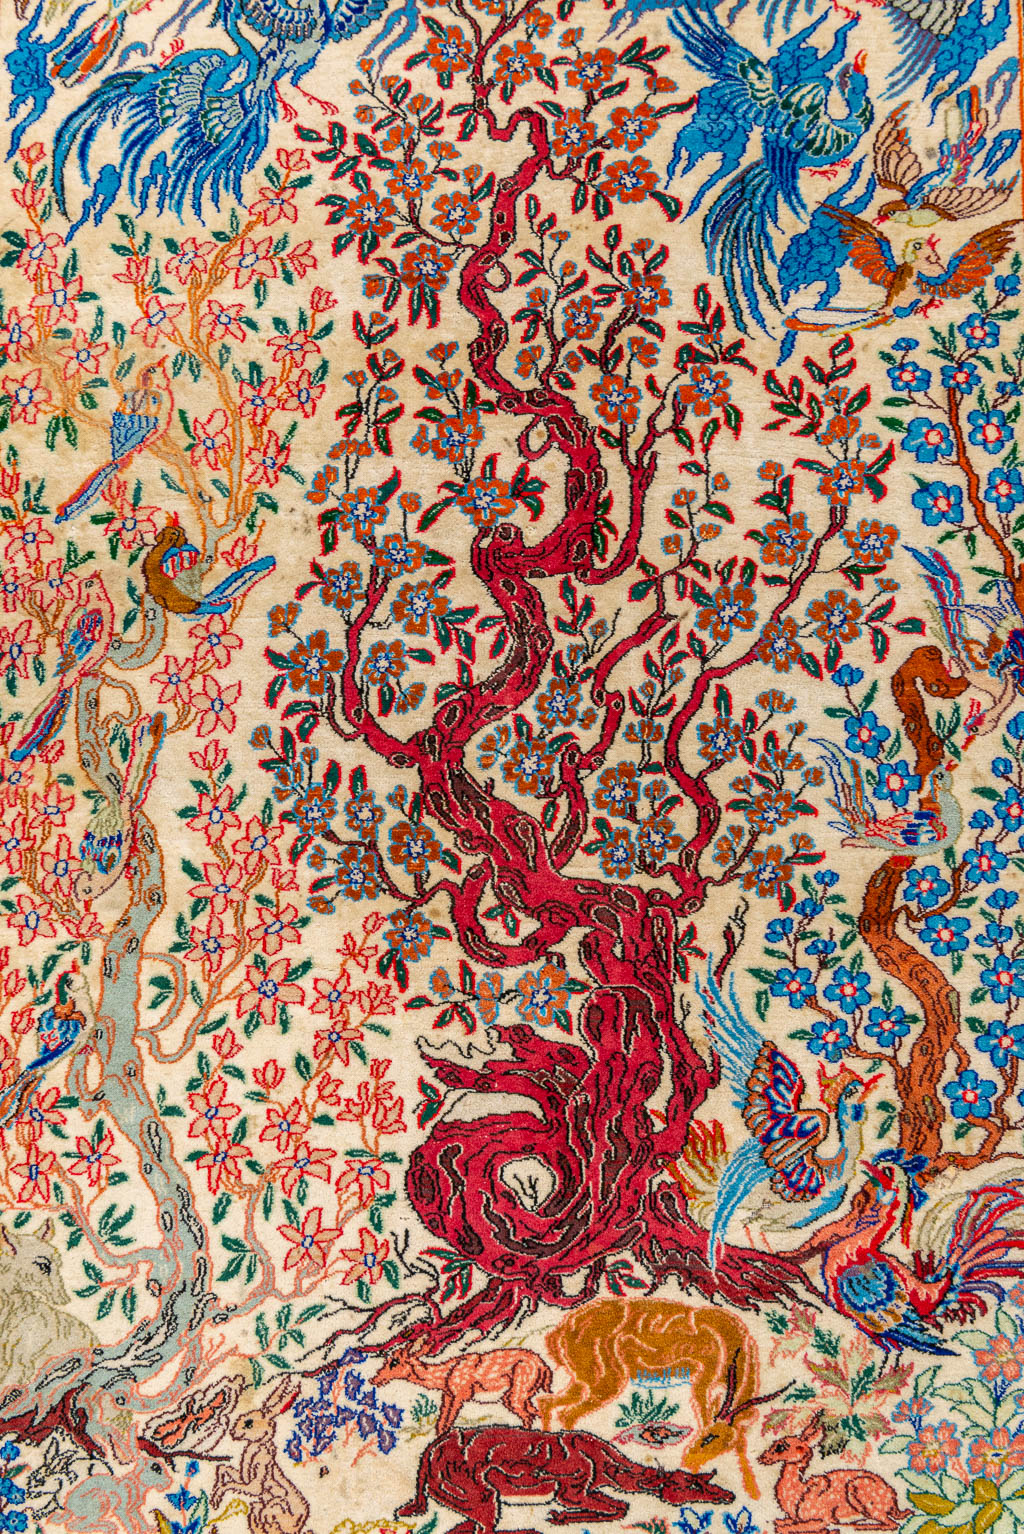 A figurative hand-made carpet, 